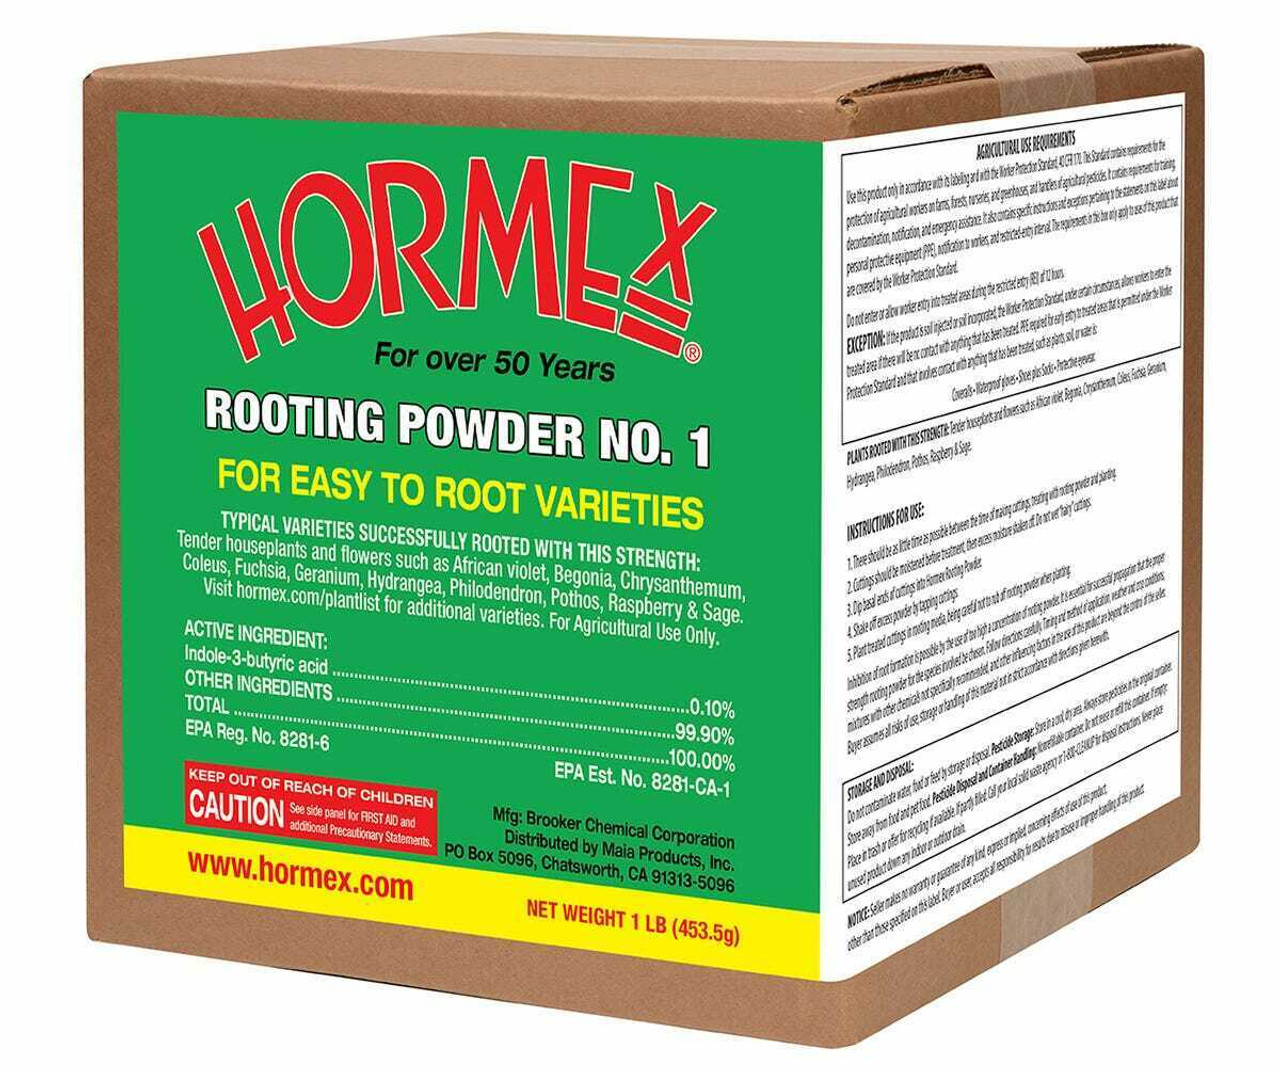 Hormex Rooting Powder #3 1lbs